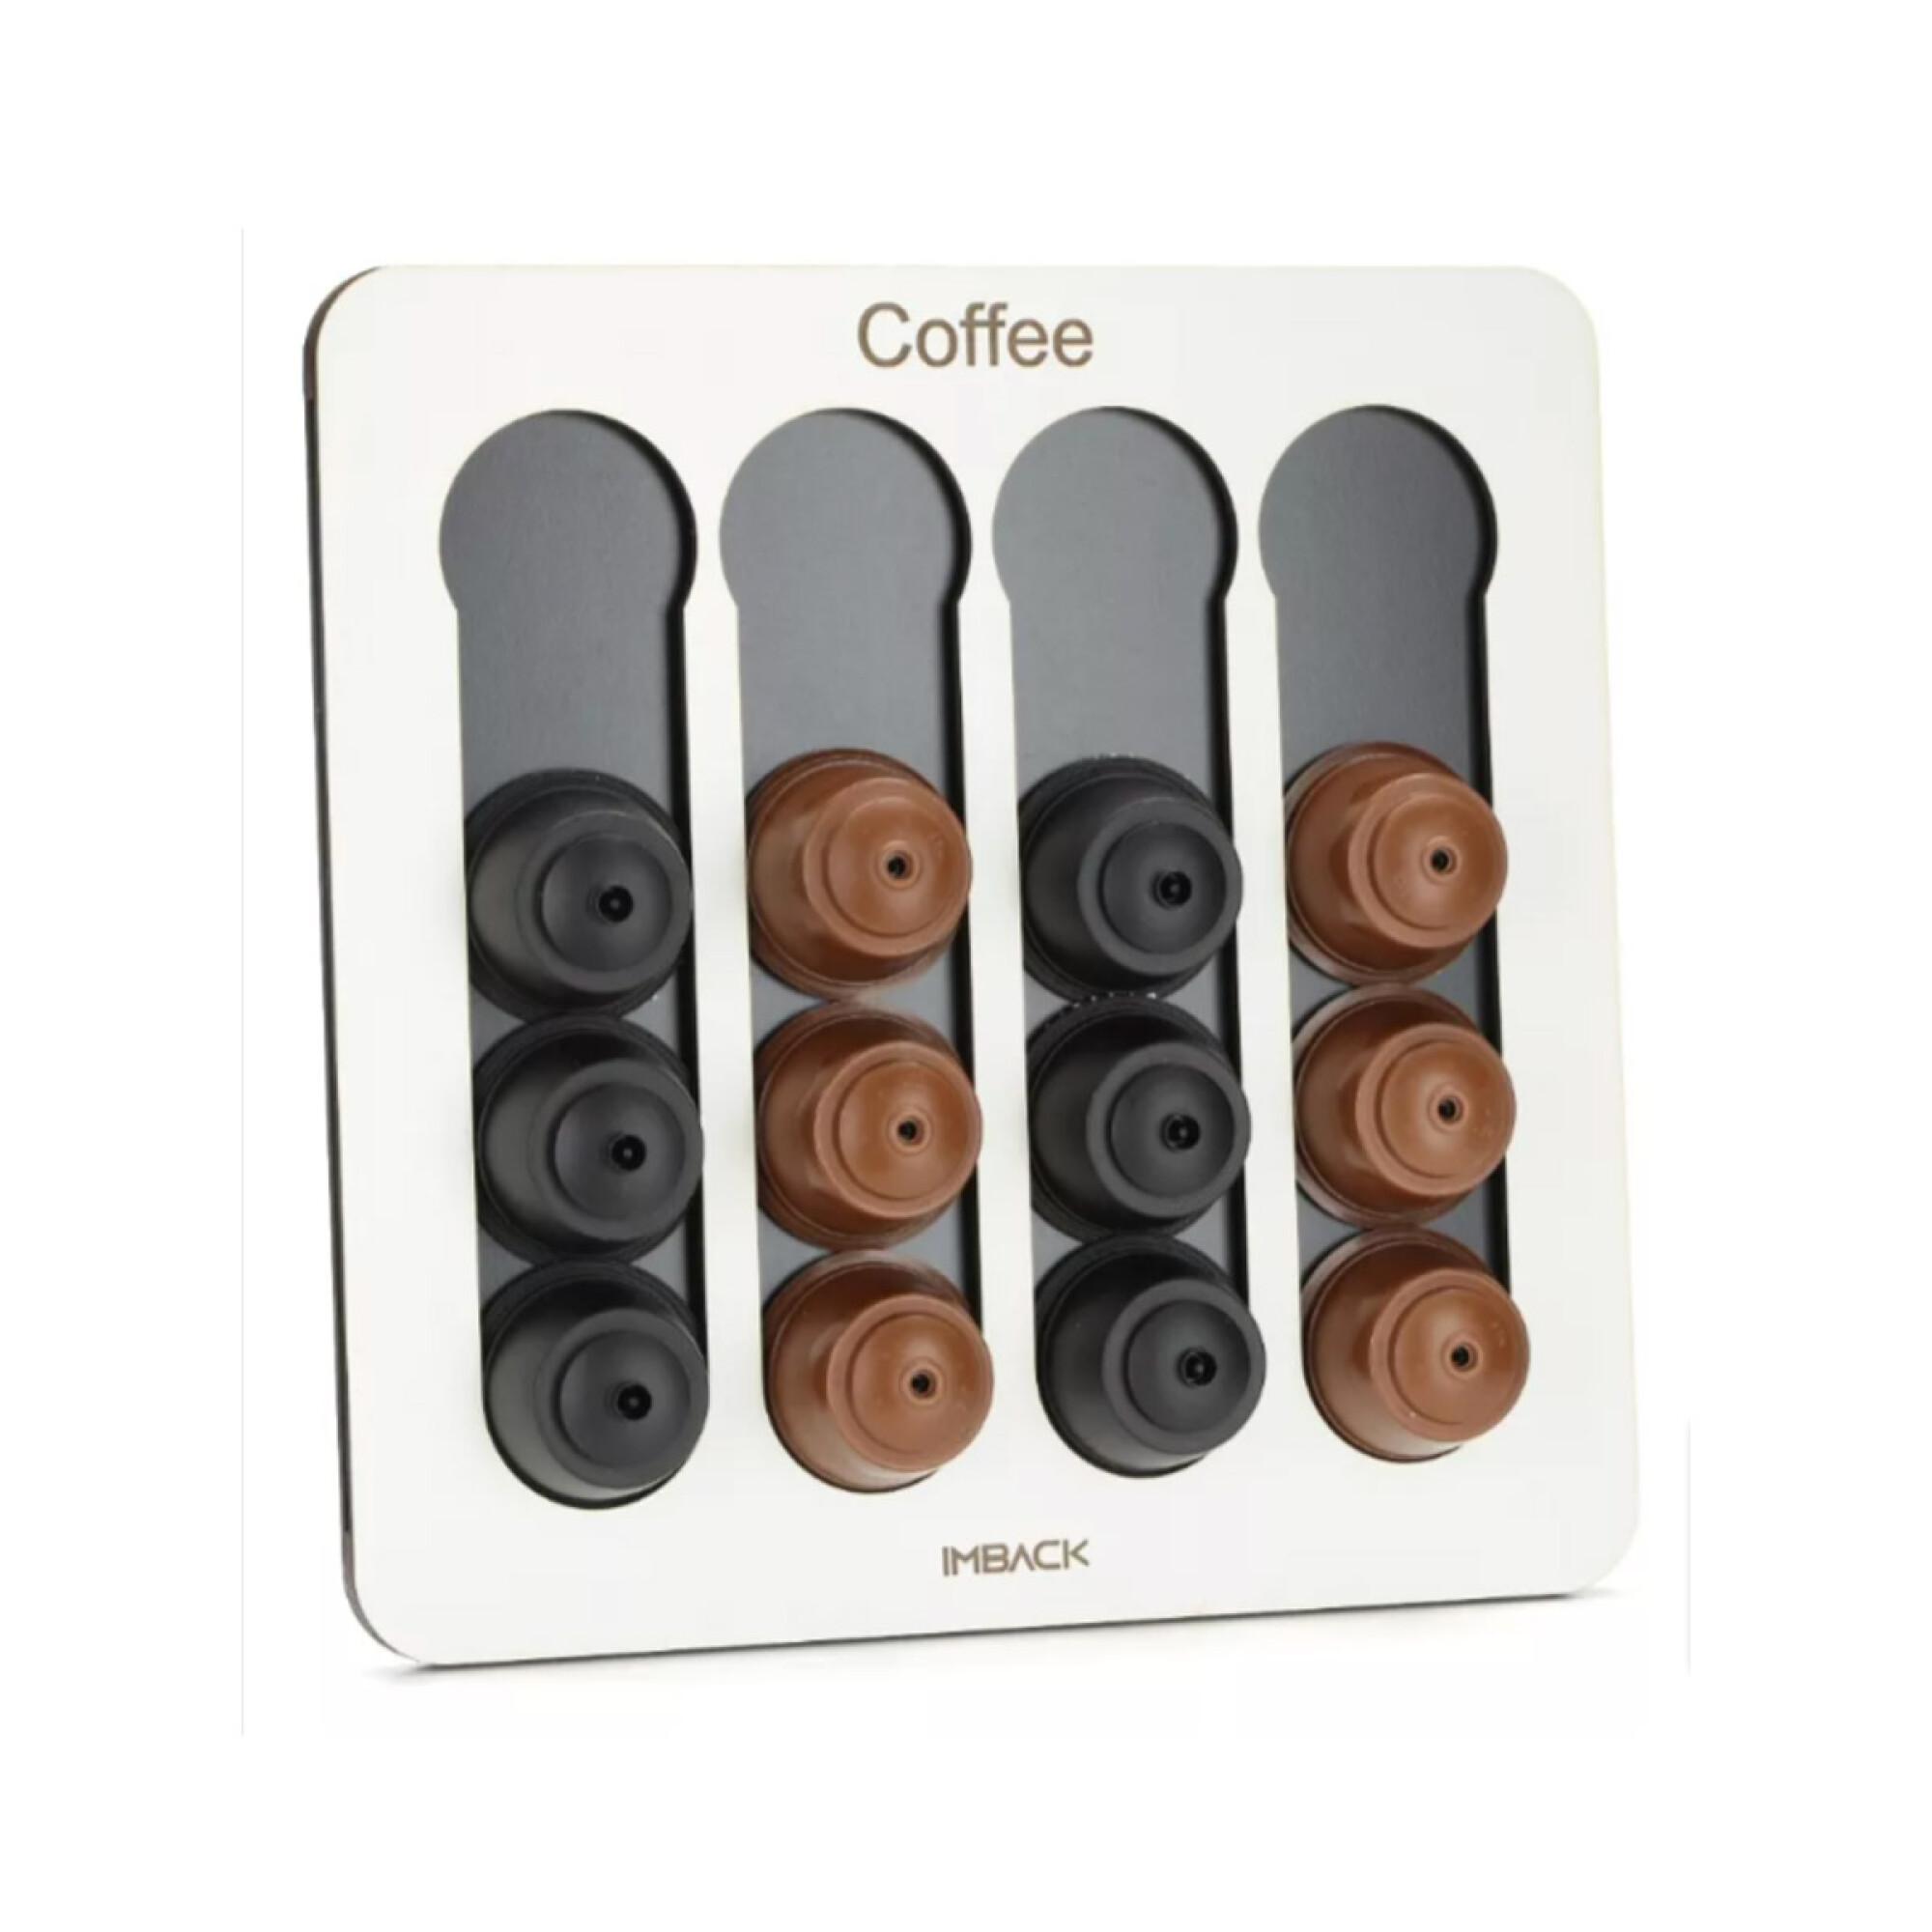 Comprar Organizador de cápsulas de café de 40 cápsulas, soporte de  almacenamiento, prácticos cajones de café, soporte para cápsulas, estantes  para café Nespresso